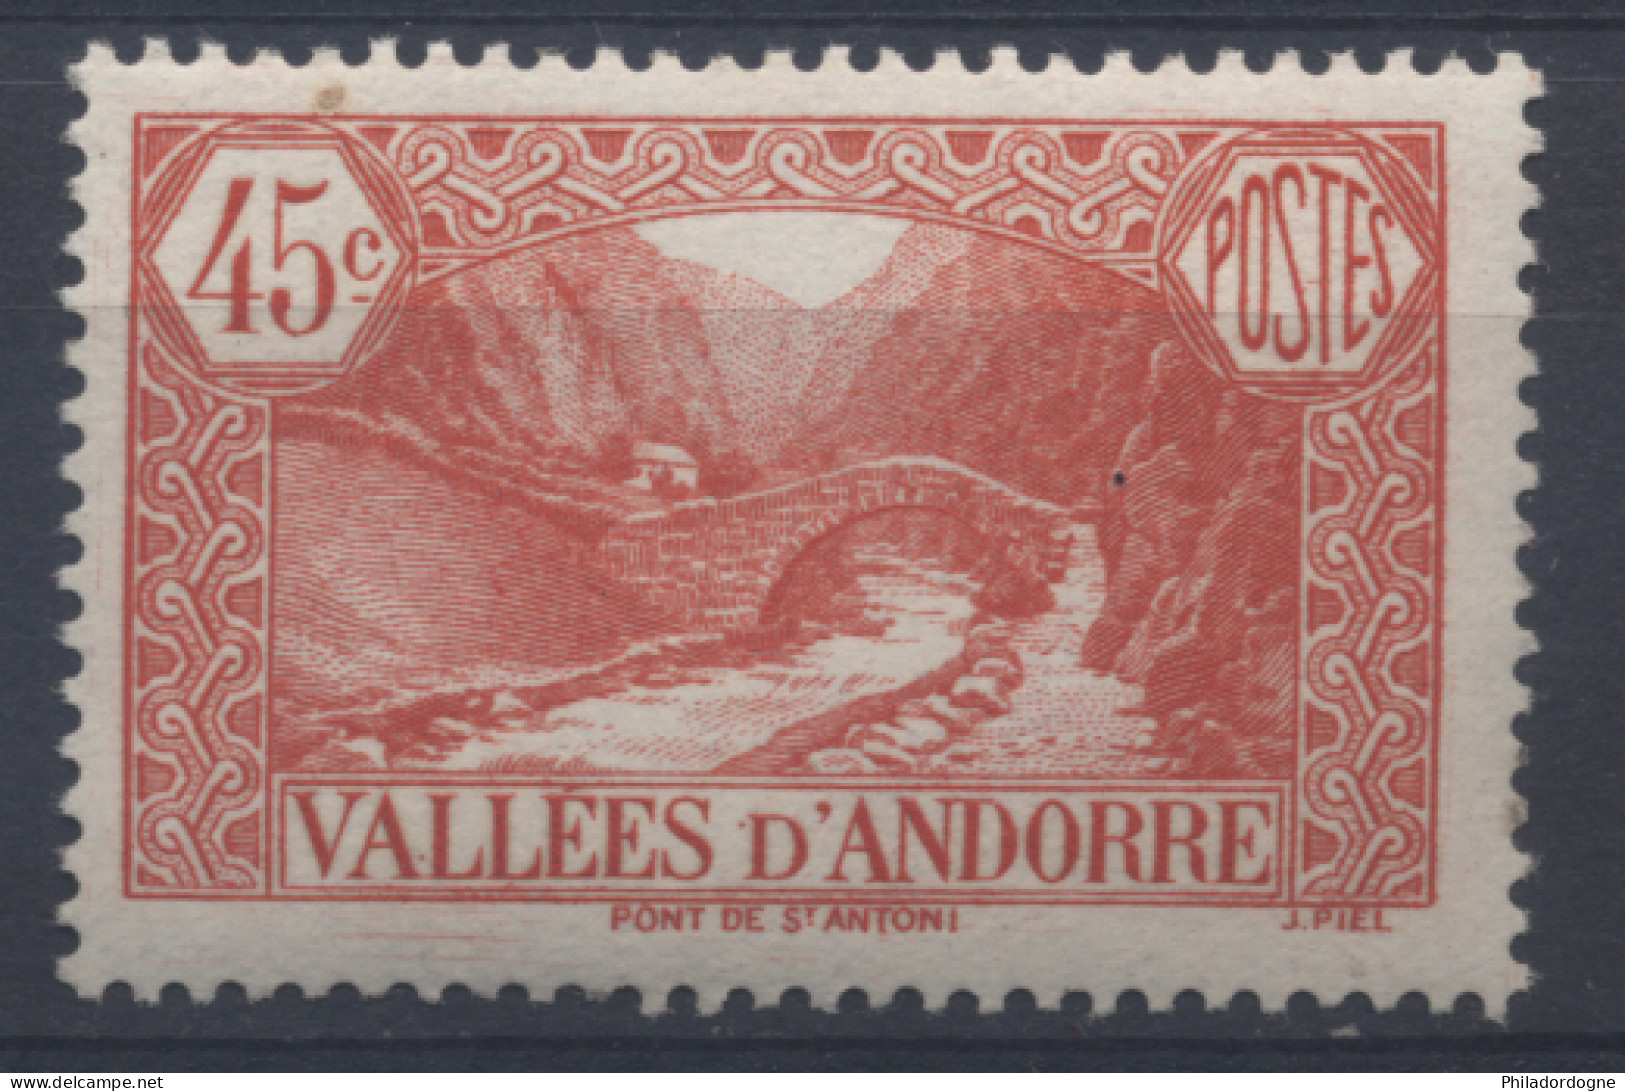 Andorre - Yvert N° 34 Neuf Et Luxe (MNH) - Cote 33 Euros - Ongebruikt